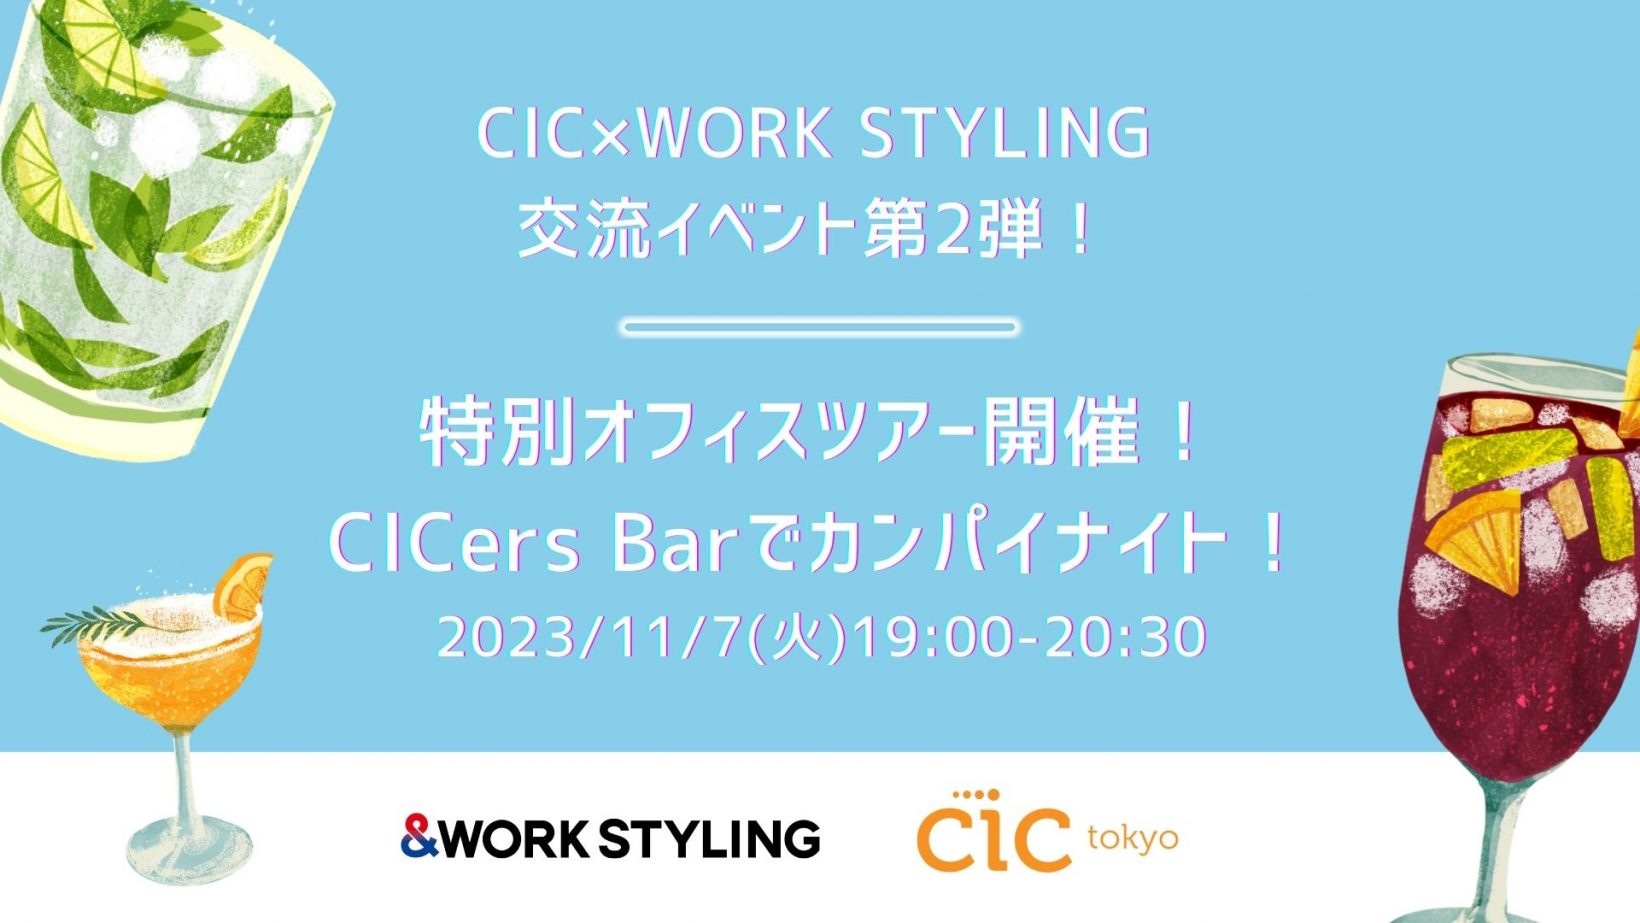 ＼CIC×WORK STYLING交流イベント第2弾／ 特別オフィスツアー開催！CICers Barでカンパイナイト！@CIC Tokyo